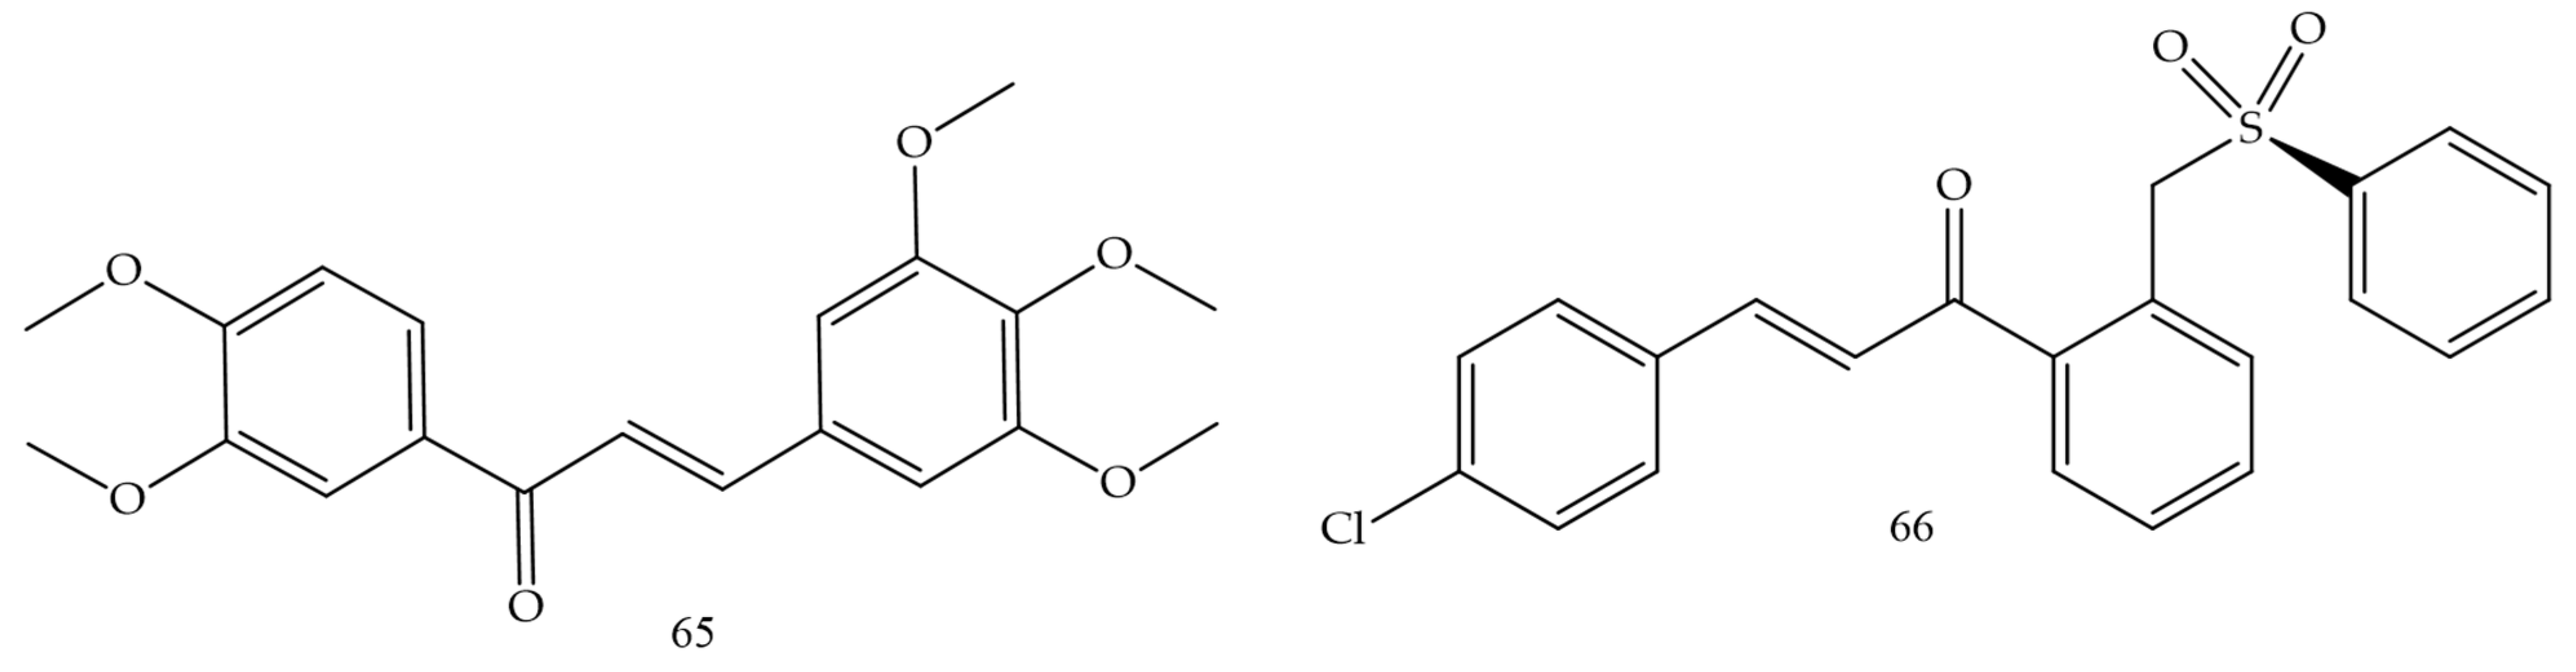 Molecules 28 04009 g012